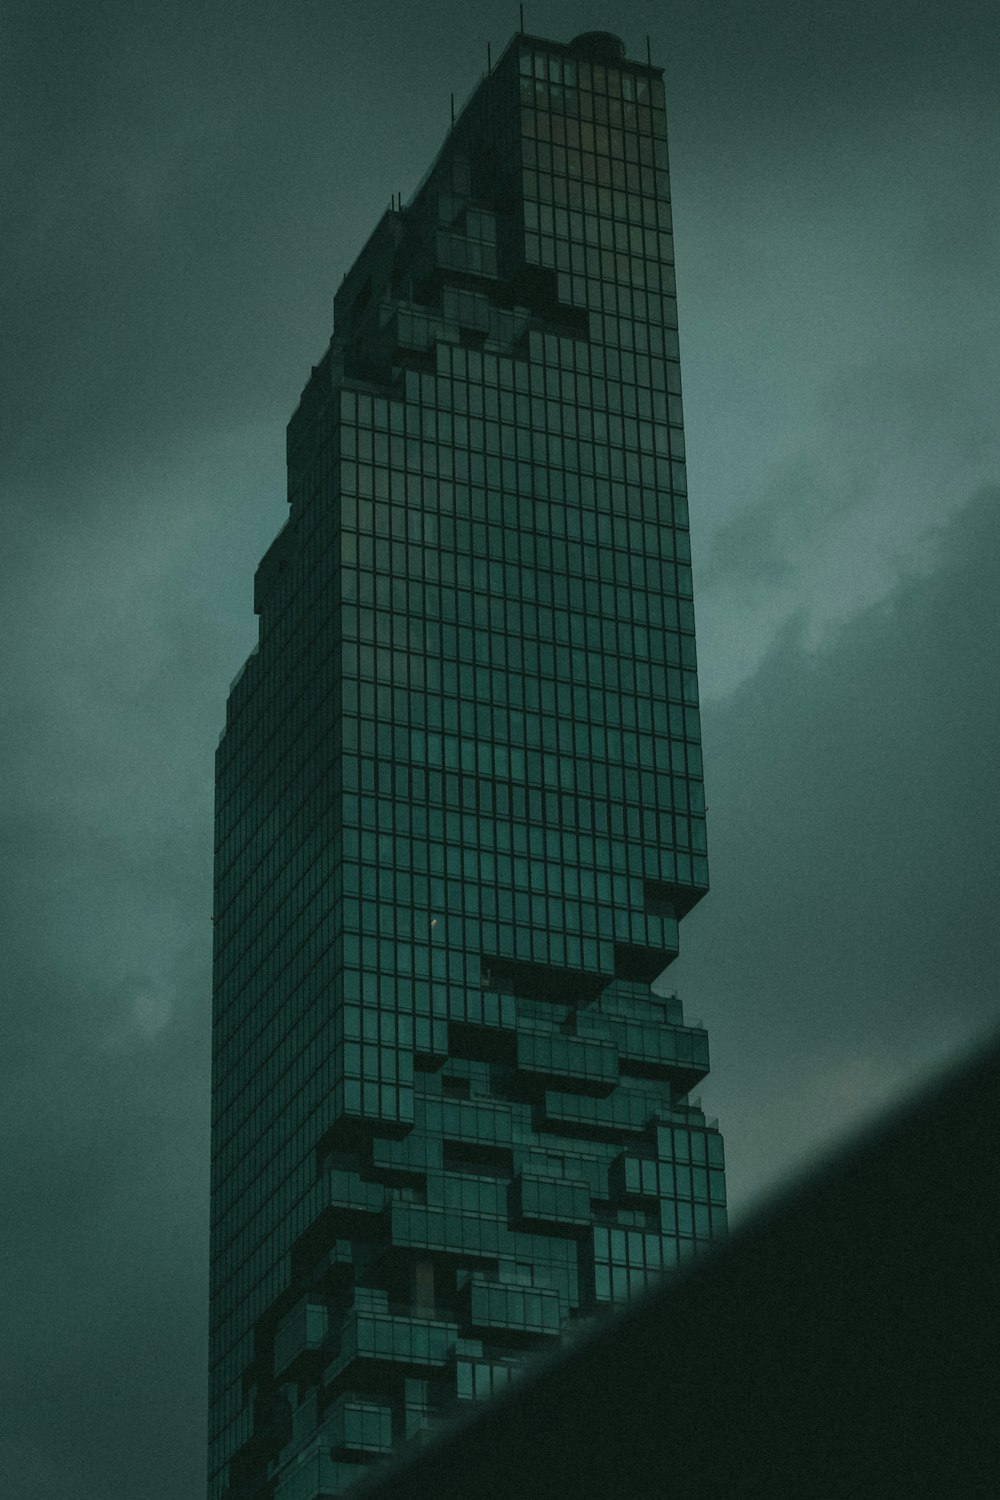 gray concrete building under gray sky